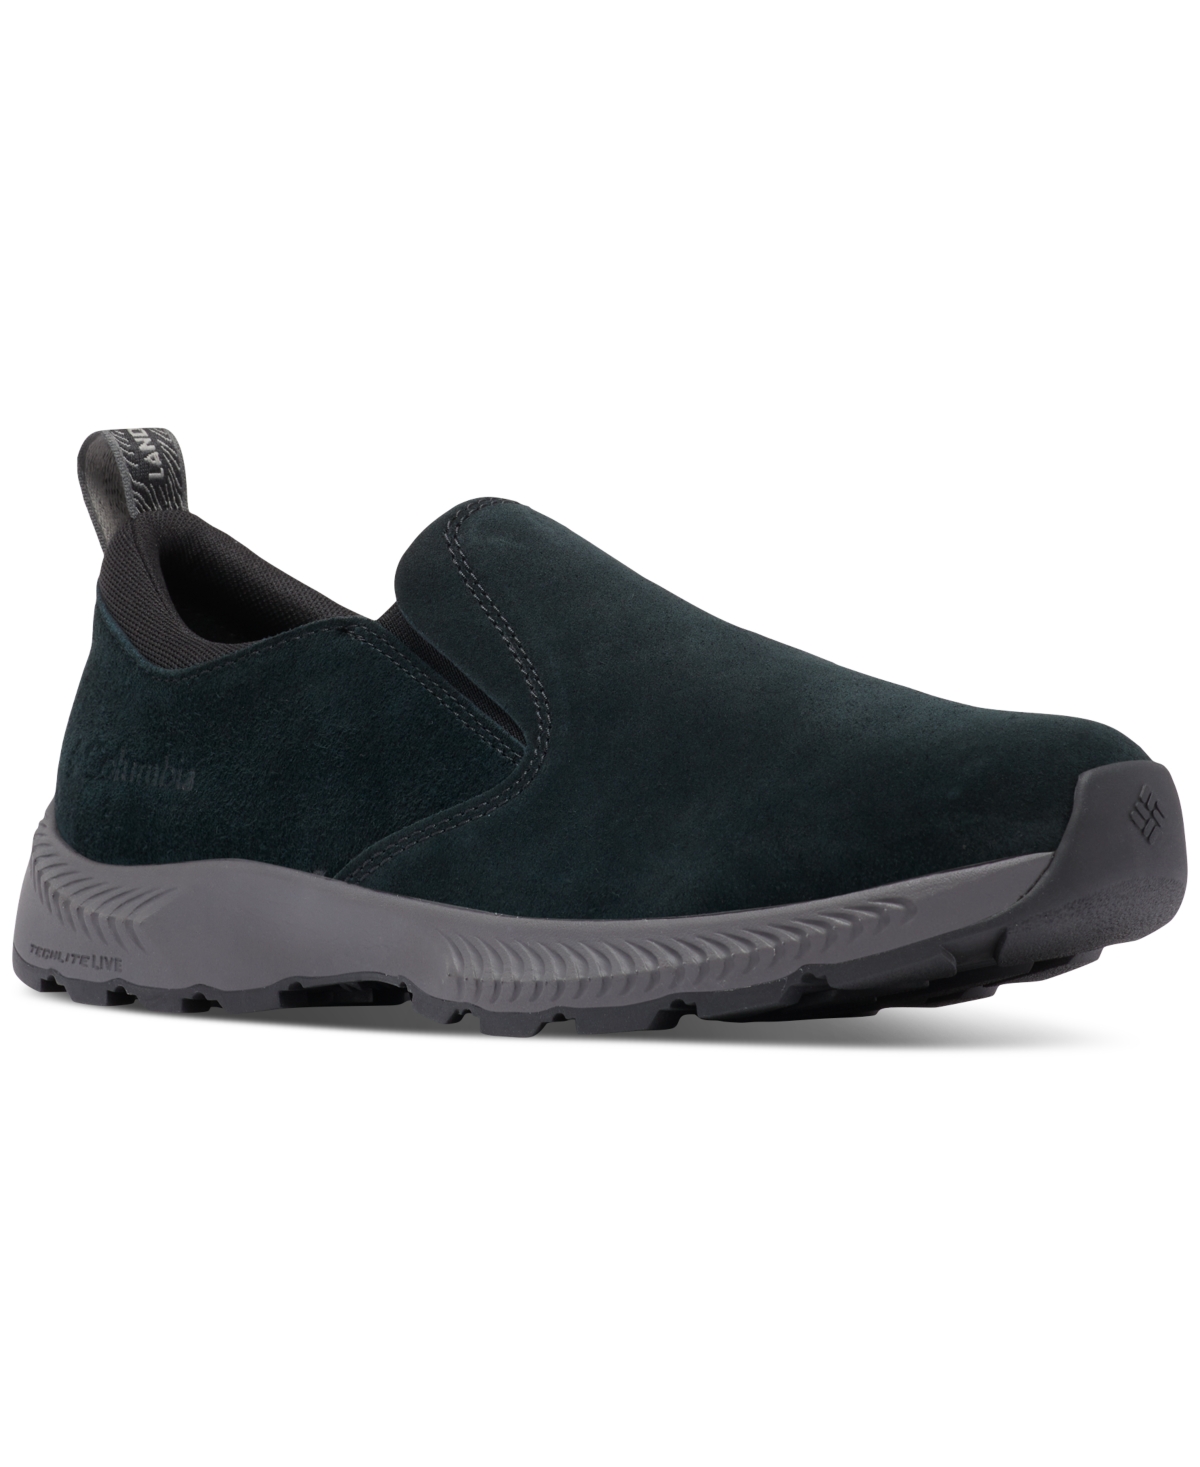 Men's Landroamer Slip-On Camper Shoes - Black, Dark Grey